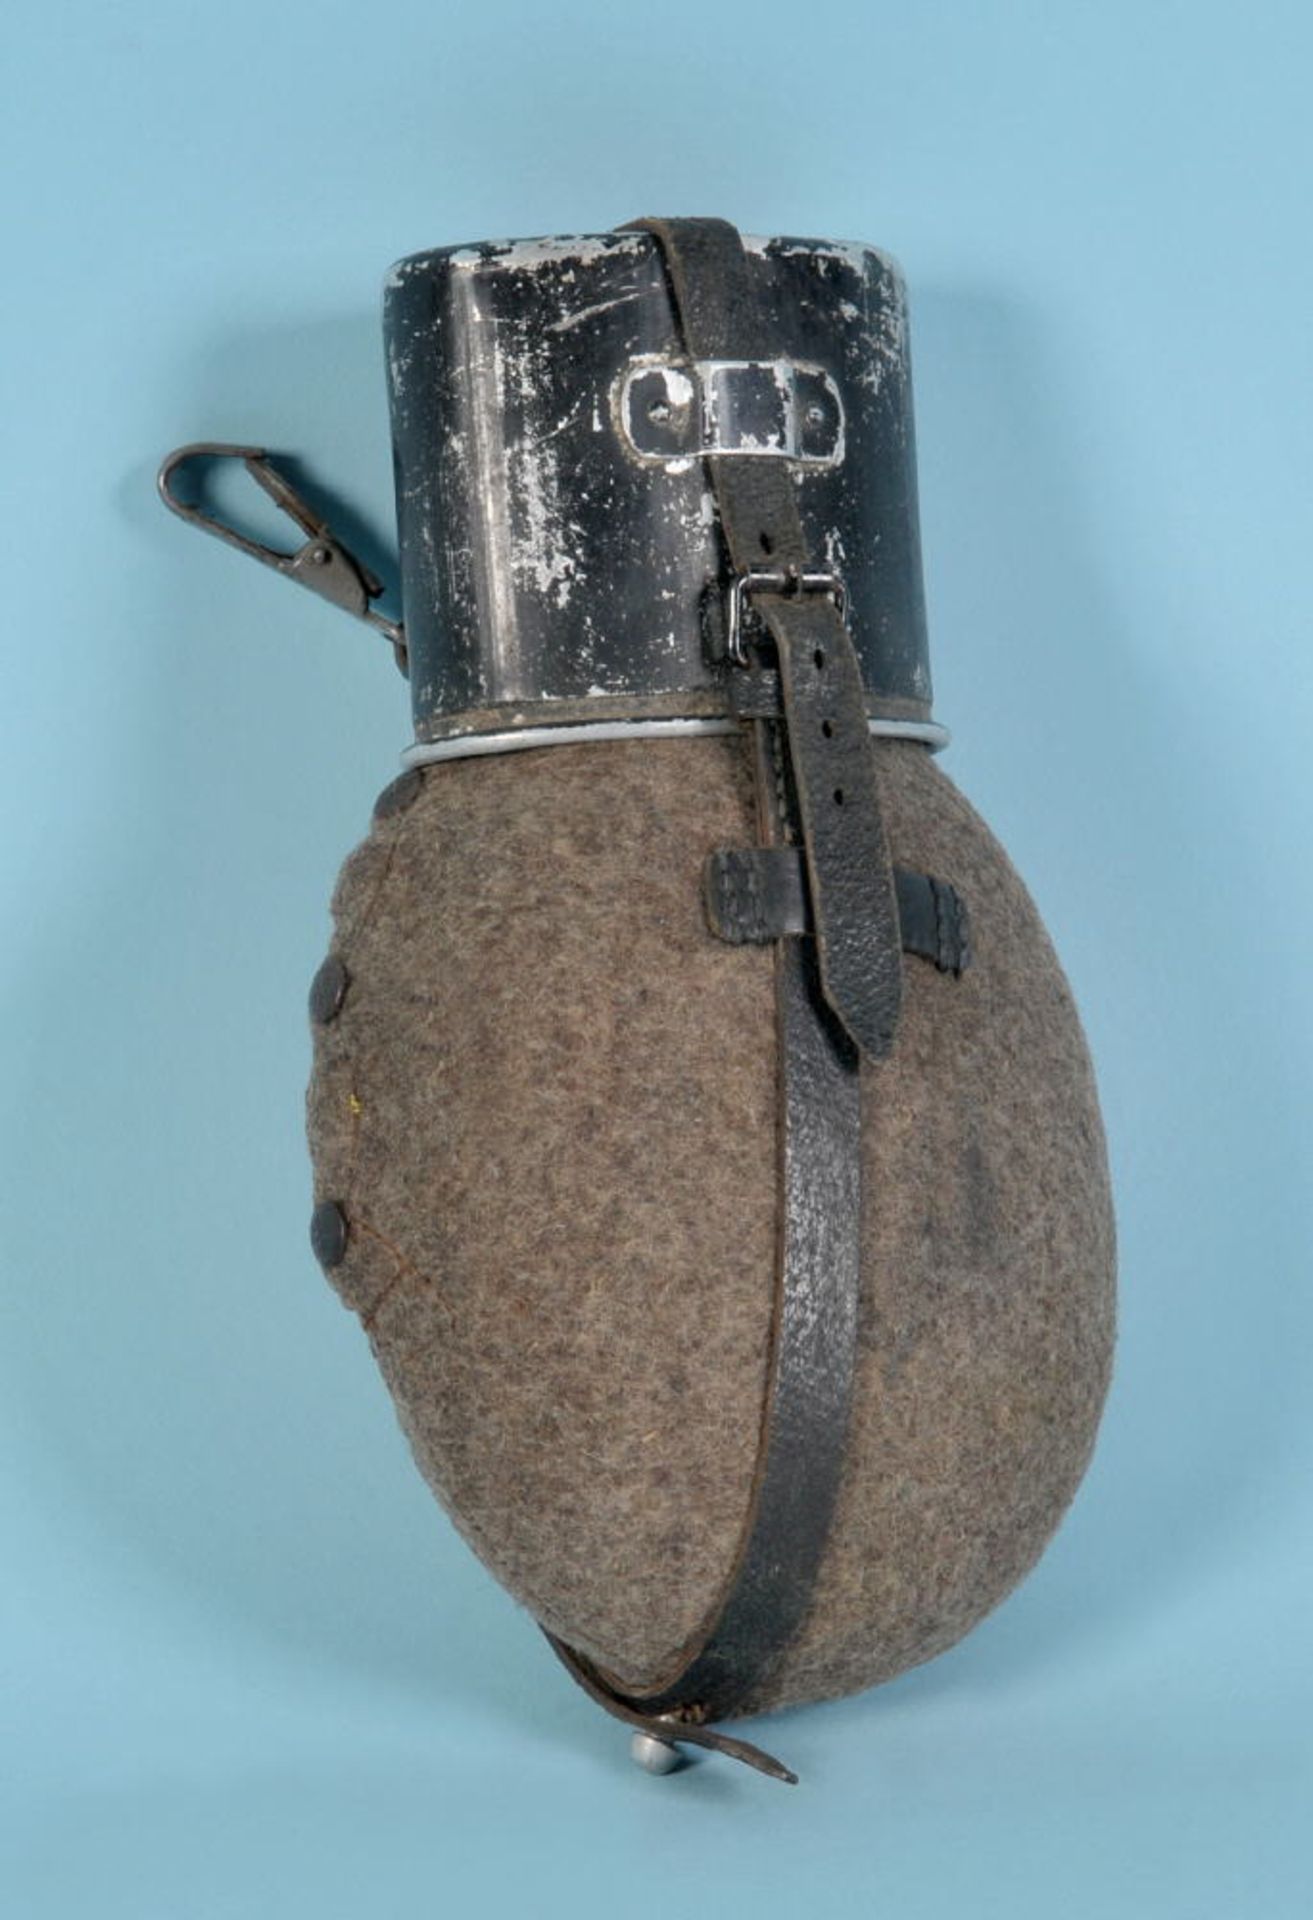 FeldflascheBlech/Filz, Schraubverschluss, mit Lederriemen, H= 27 cm